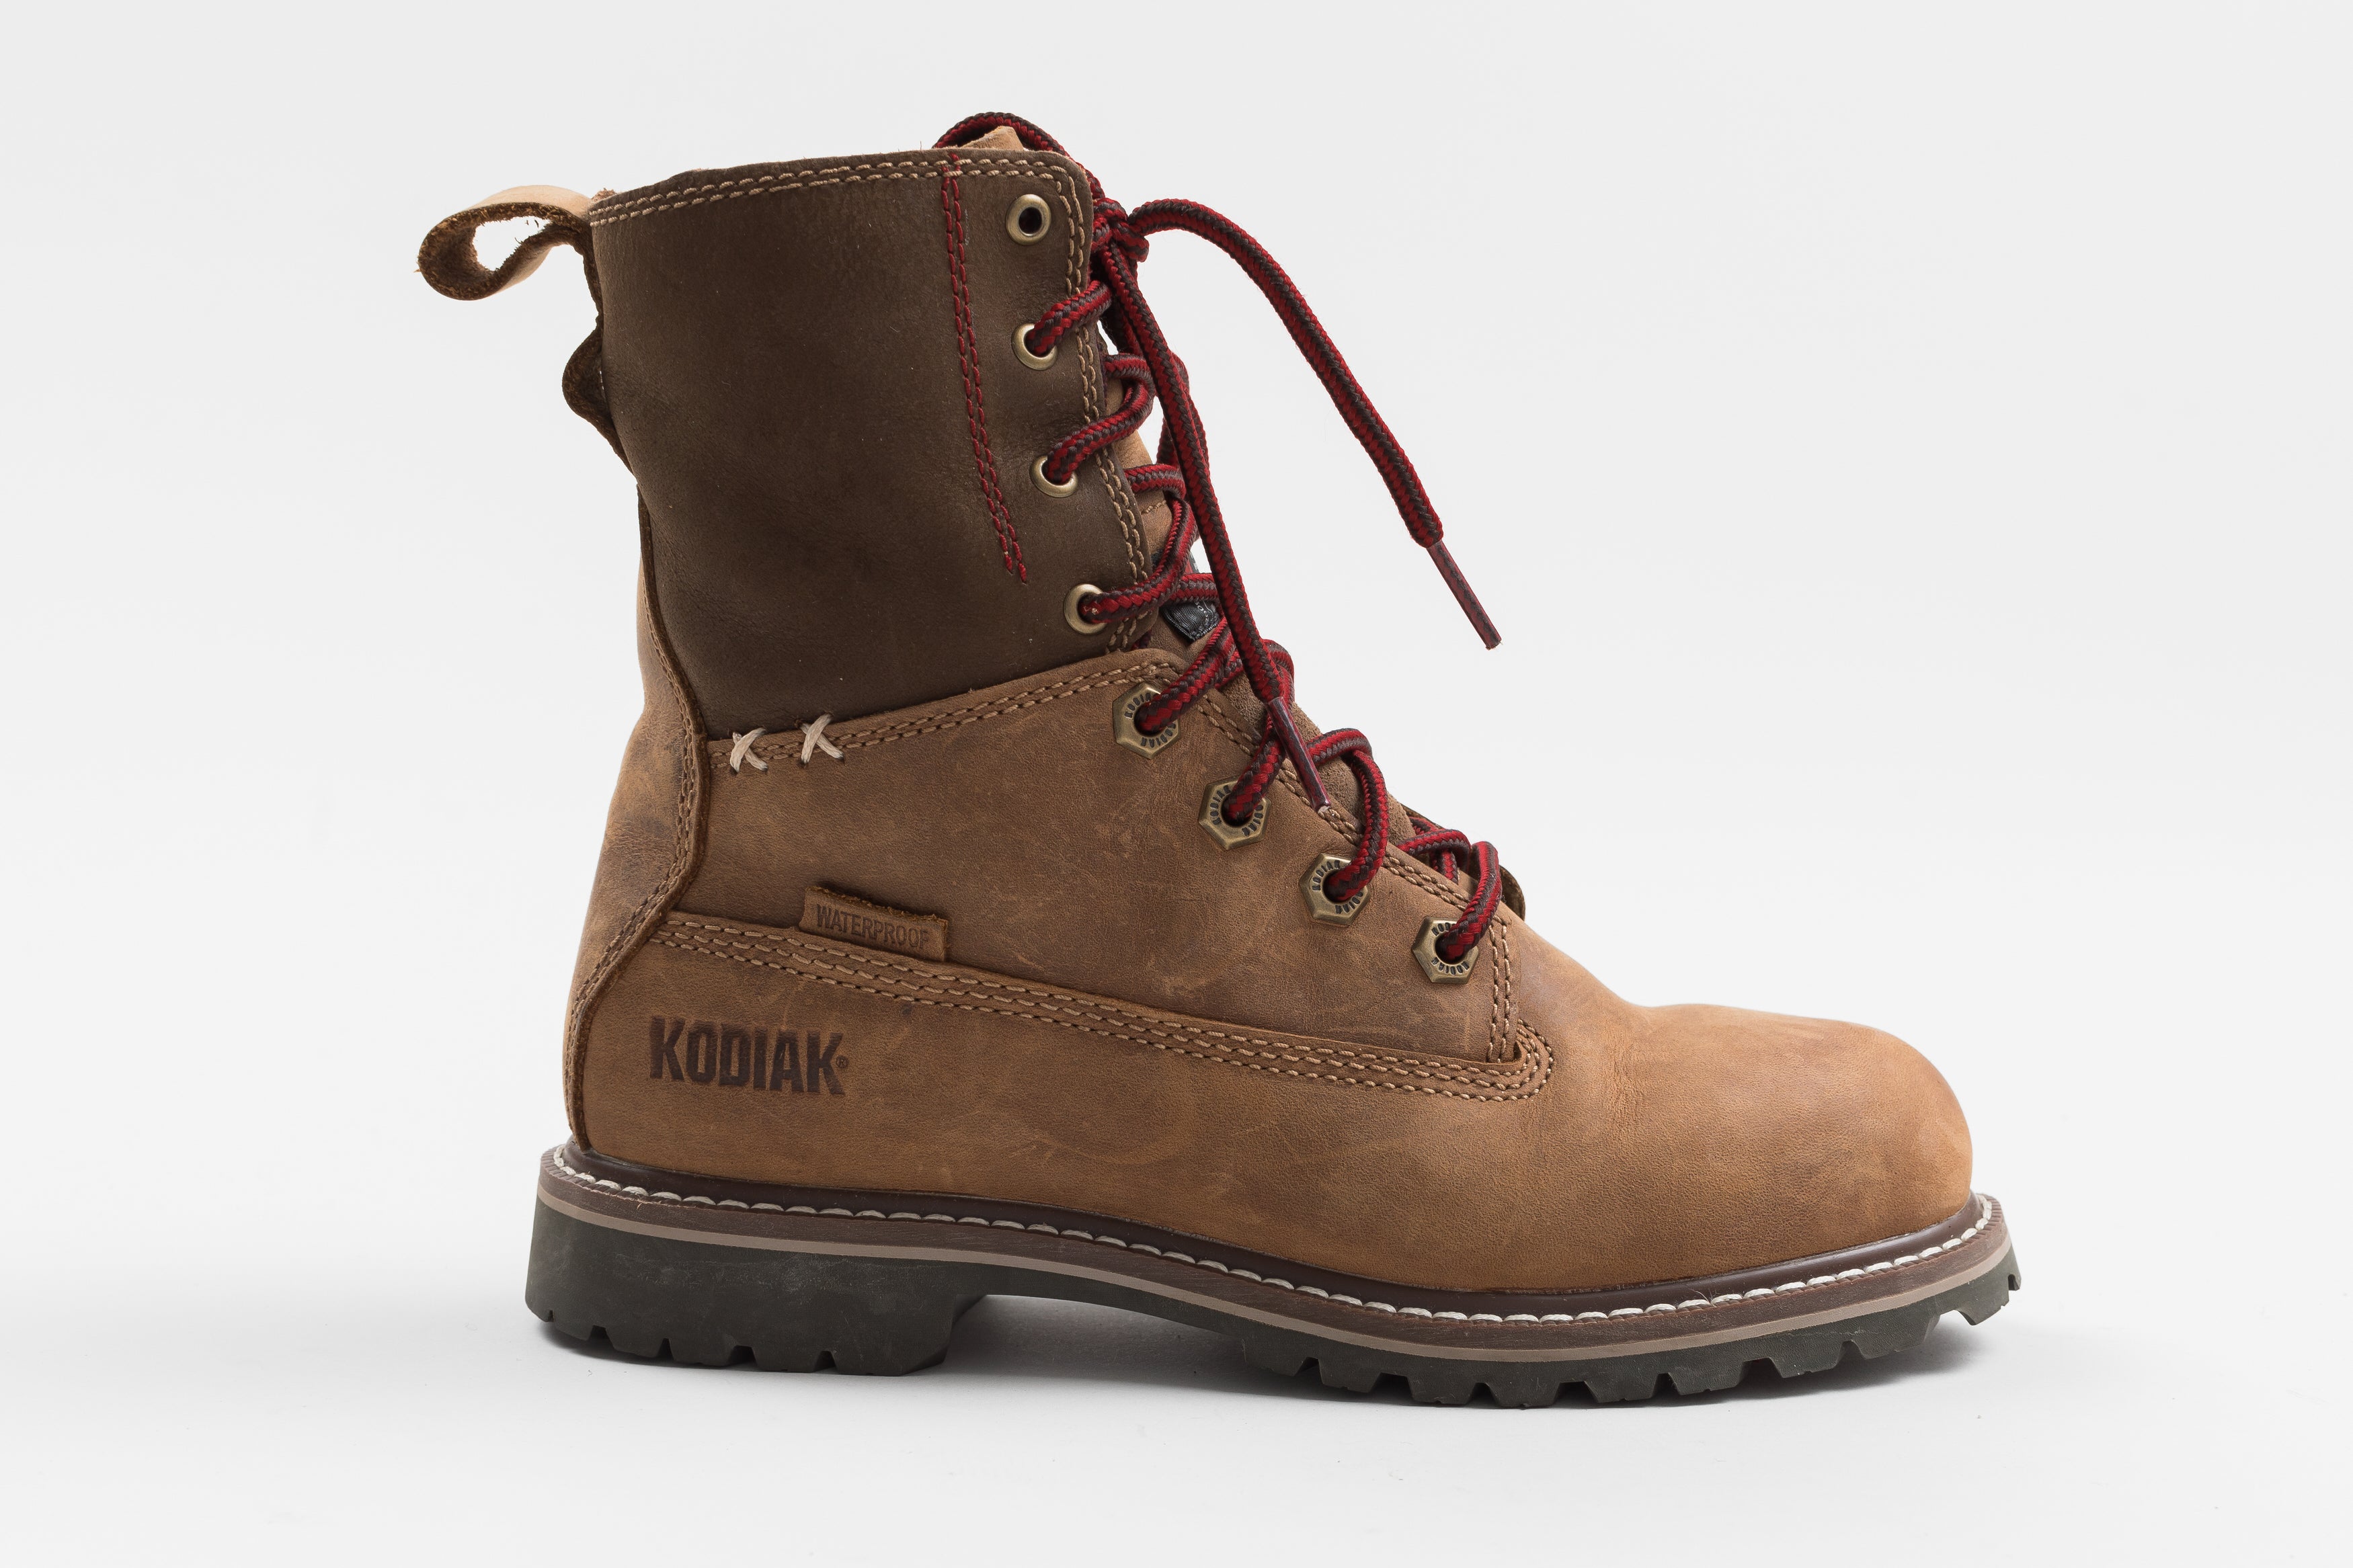 Kodiak ankle boots (5/36)